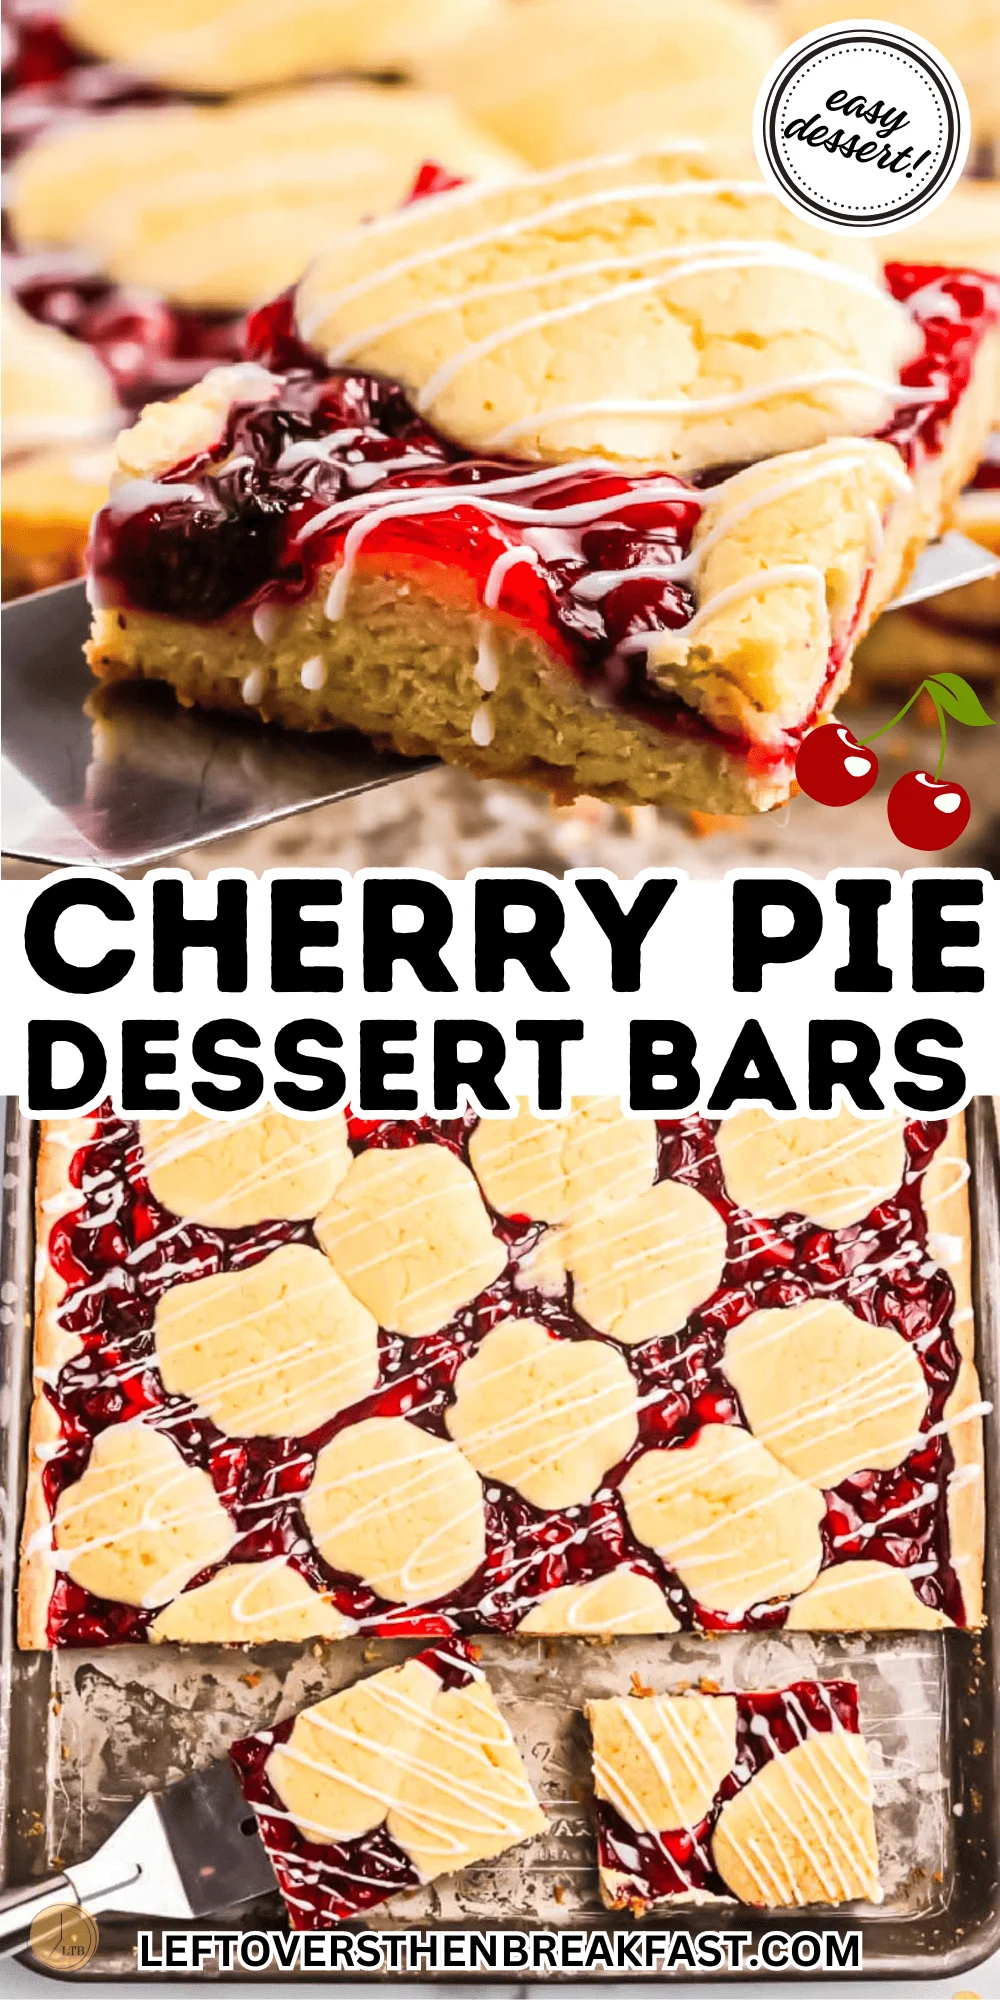 cherry pie bars recipe